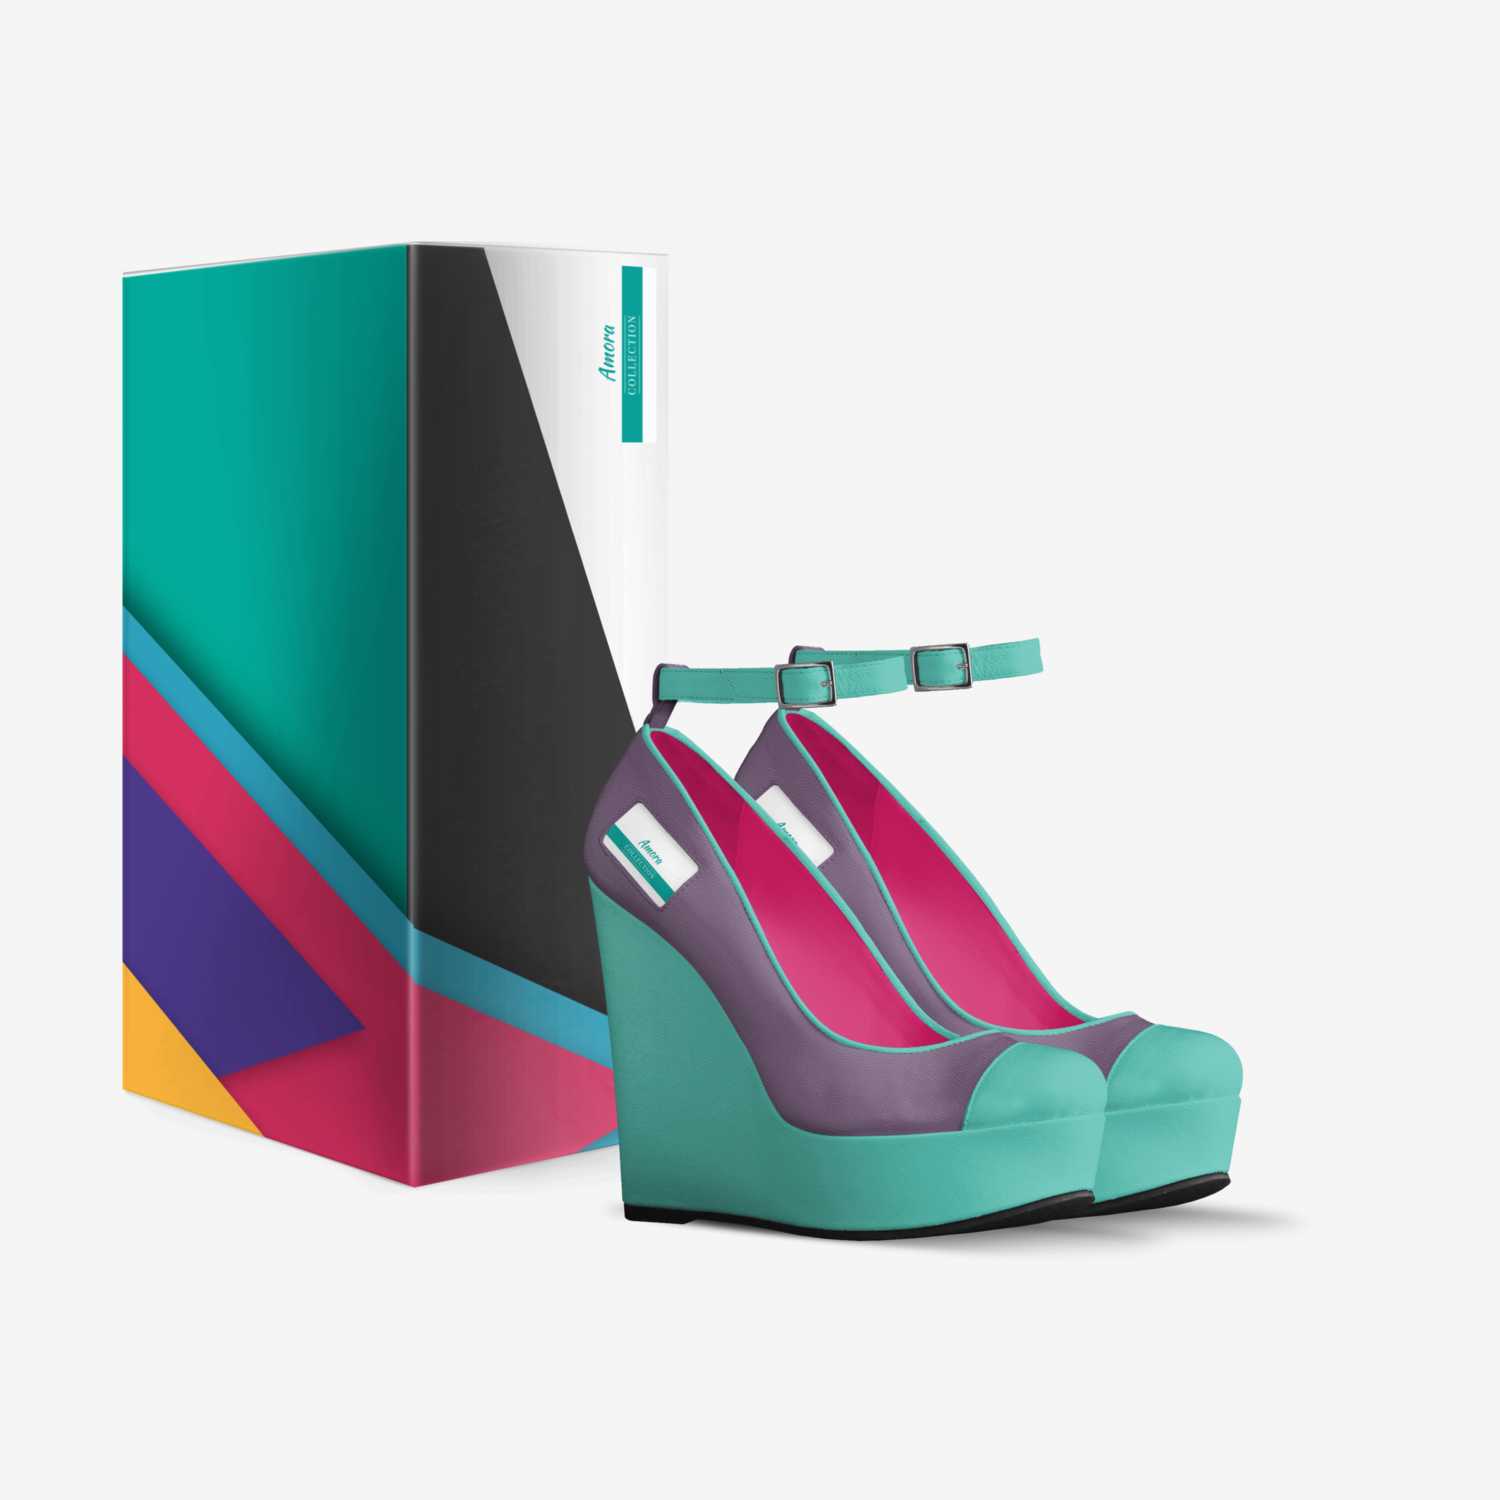 Amora custom made in Italy shoes by Mira Memora | Box view